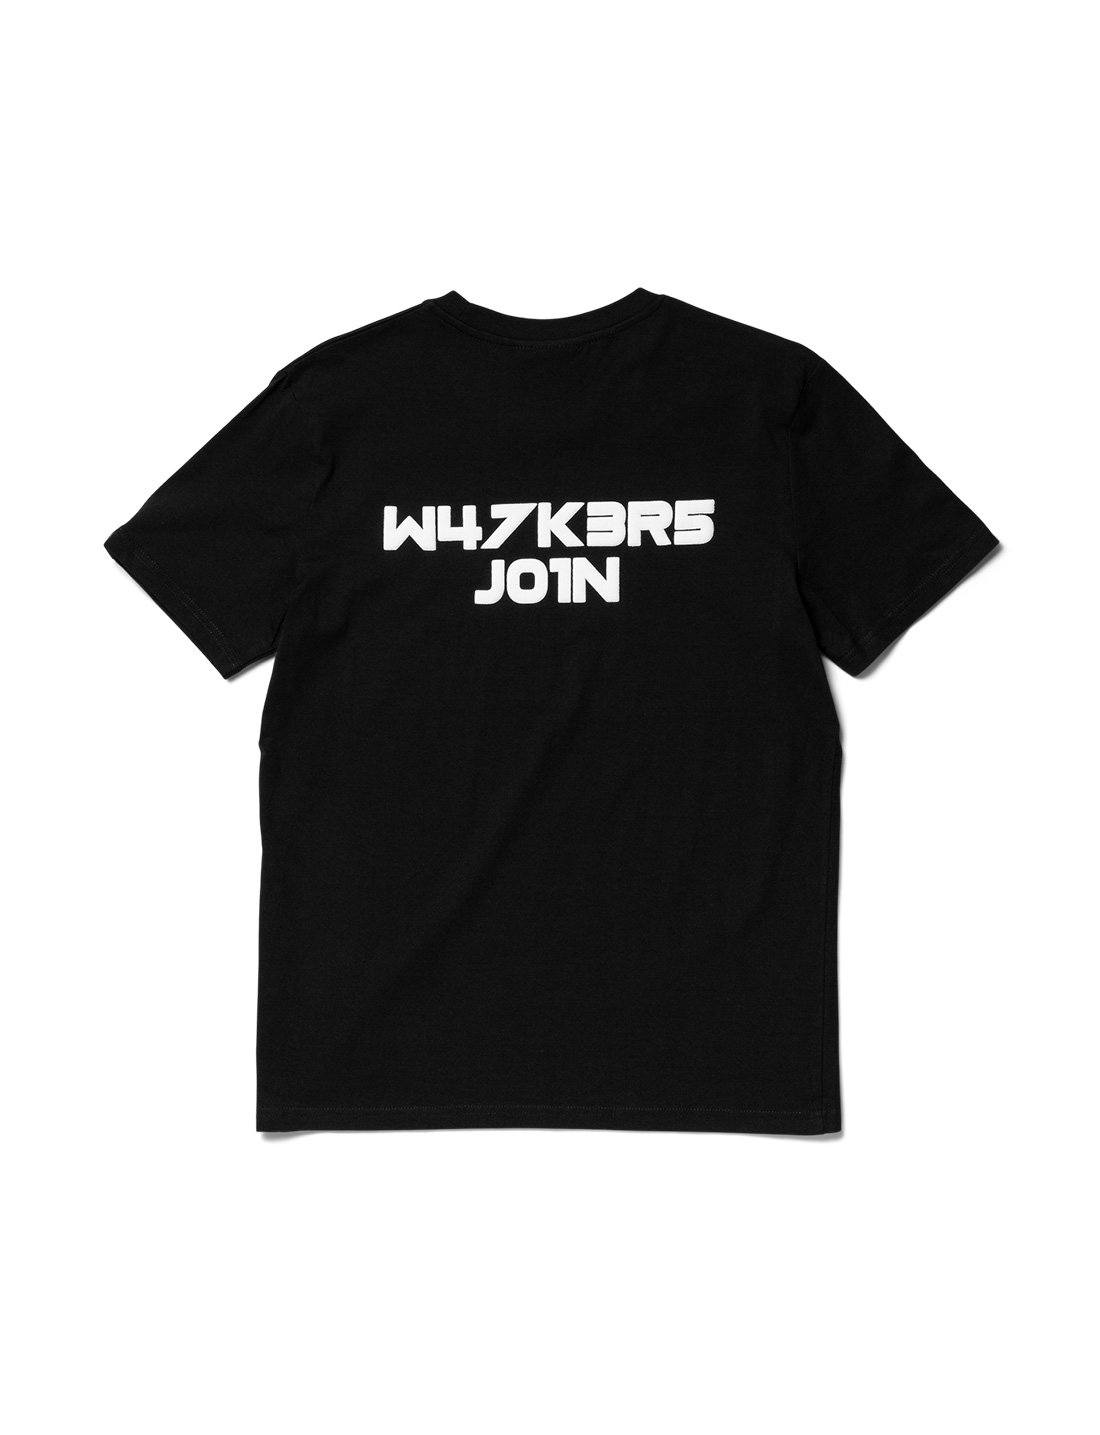 CORE W47K3R5 J01N T-SHIRT Tee Alan Walker Official Merchandise 